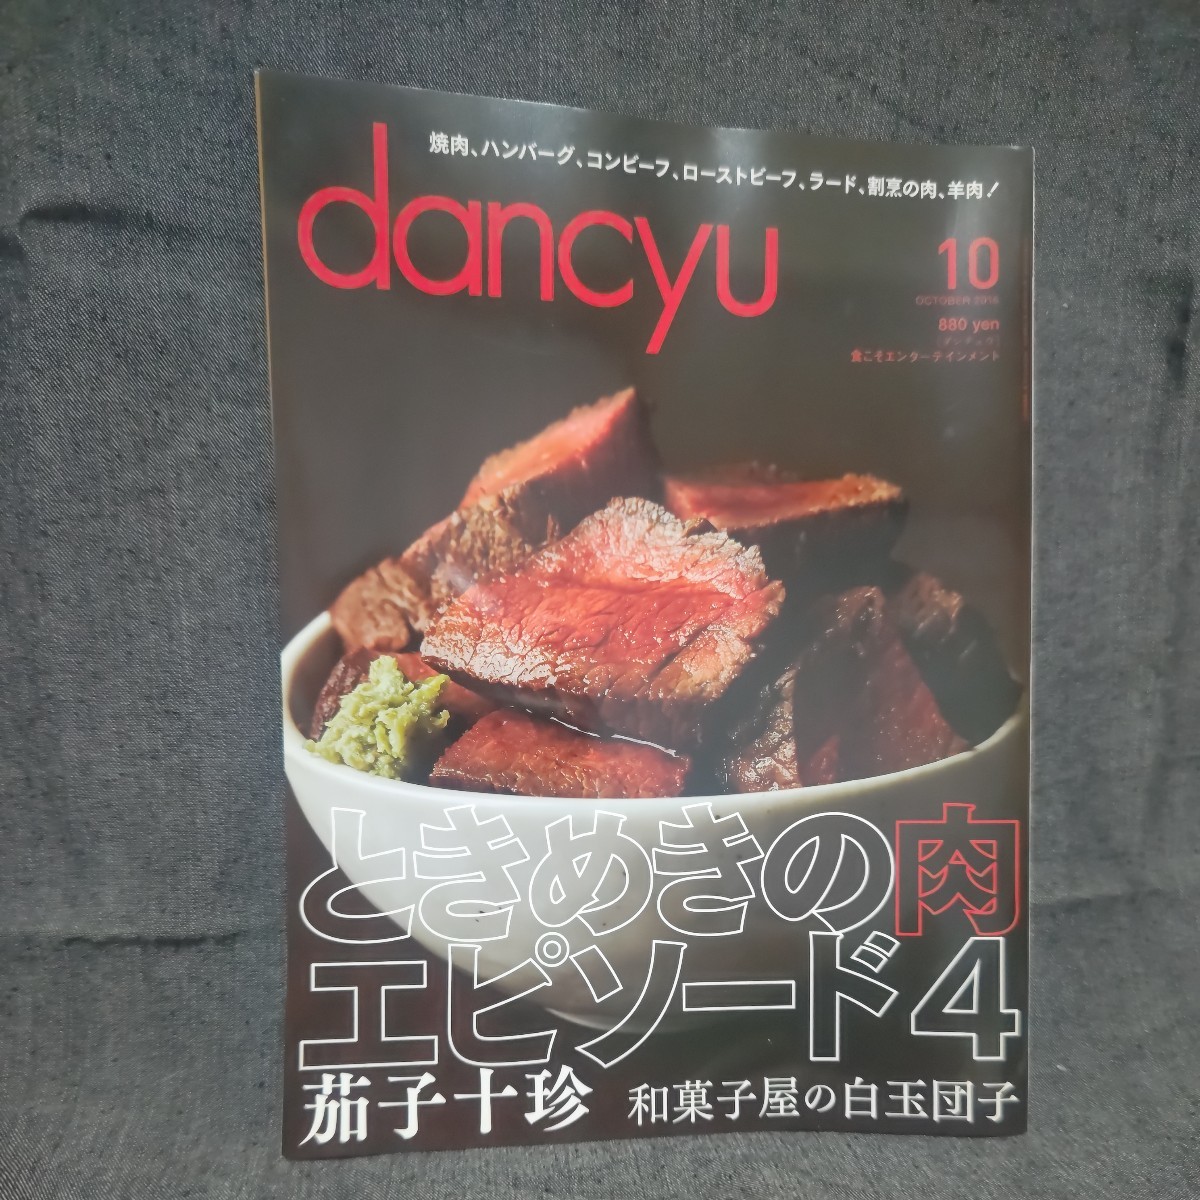 dancyu 2016年 10月号 未読 新品 ダンチュウ_画像1